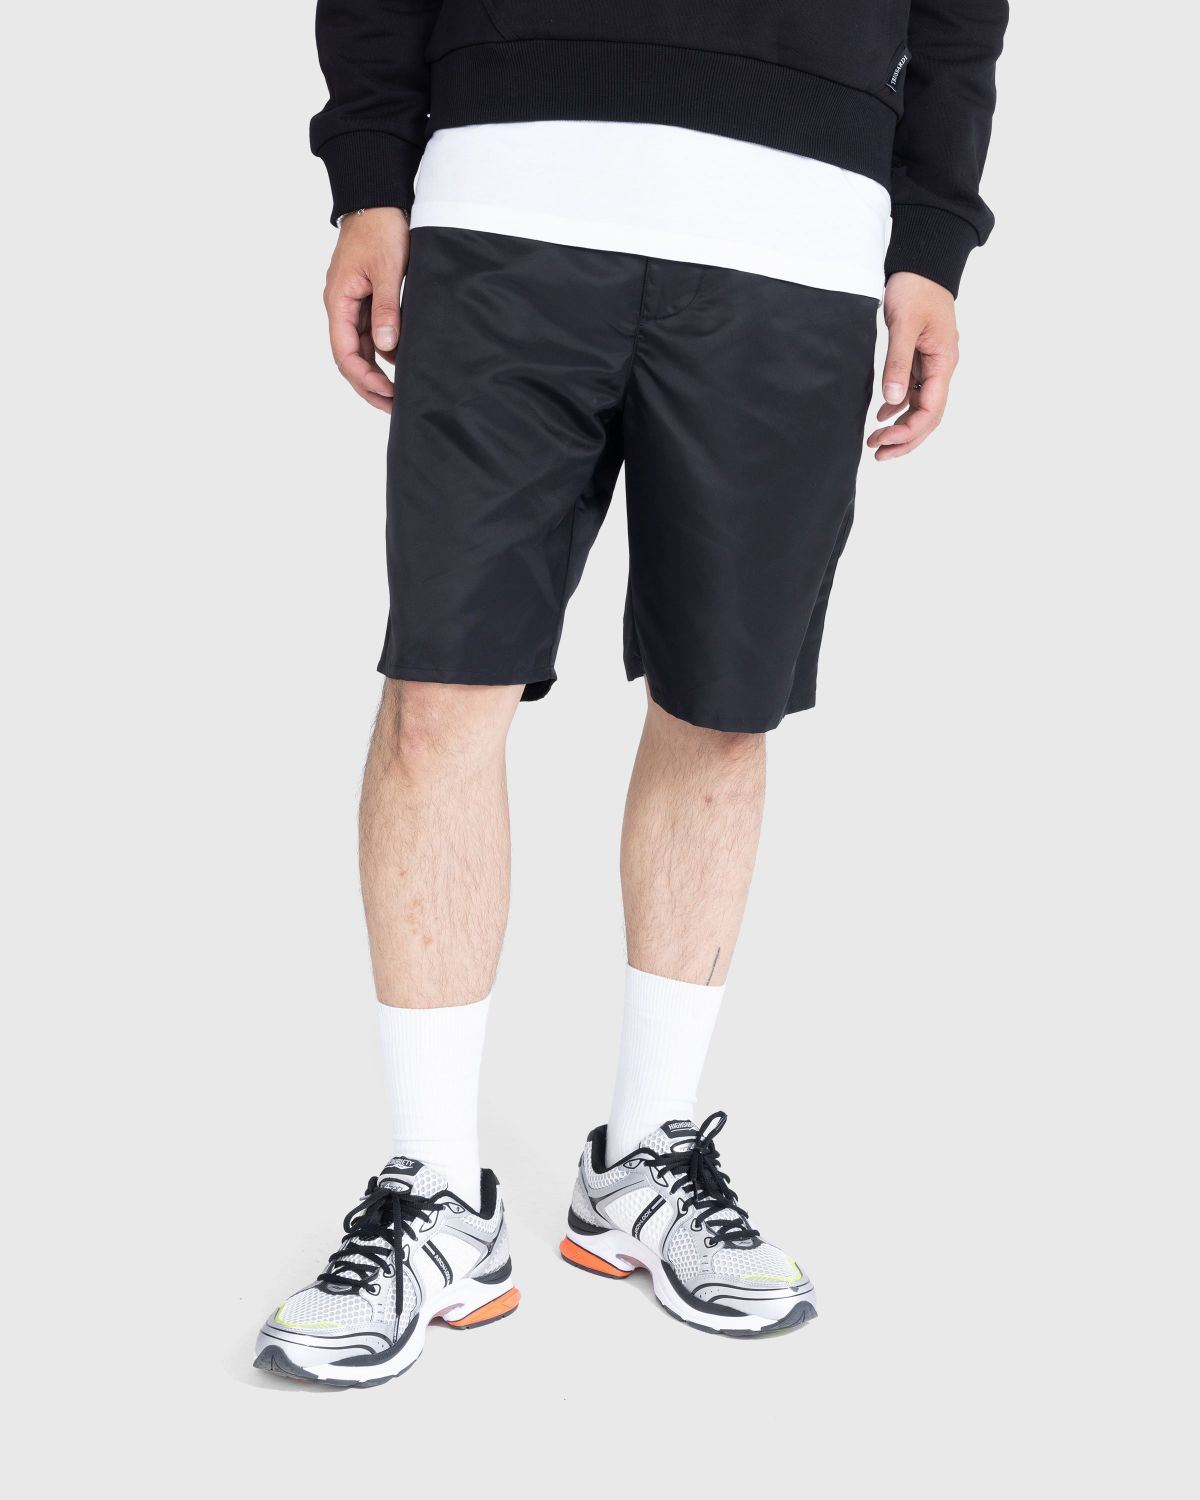 Trussardi – Nylon Shorts Black - Shorts - Black - Image 2